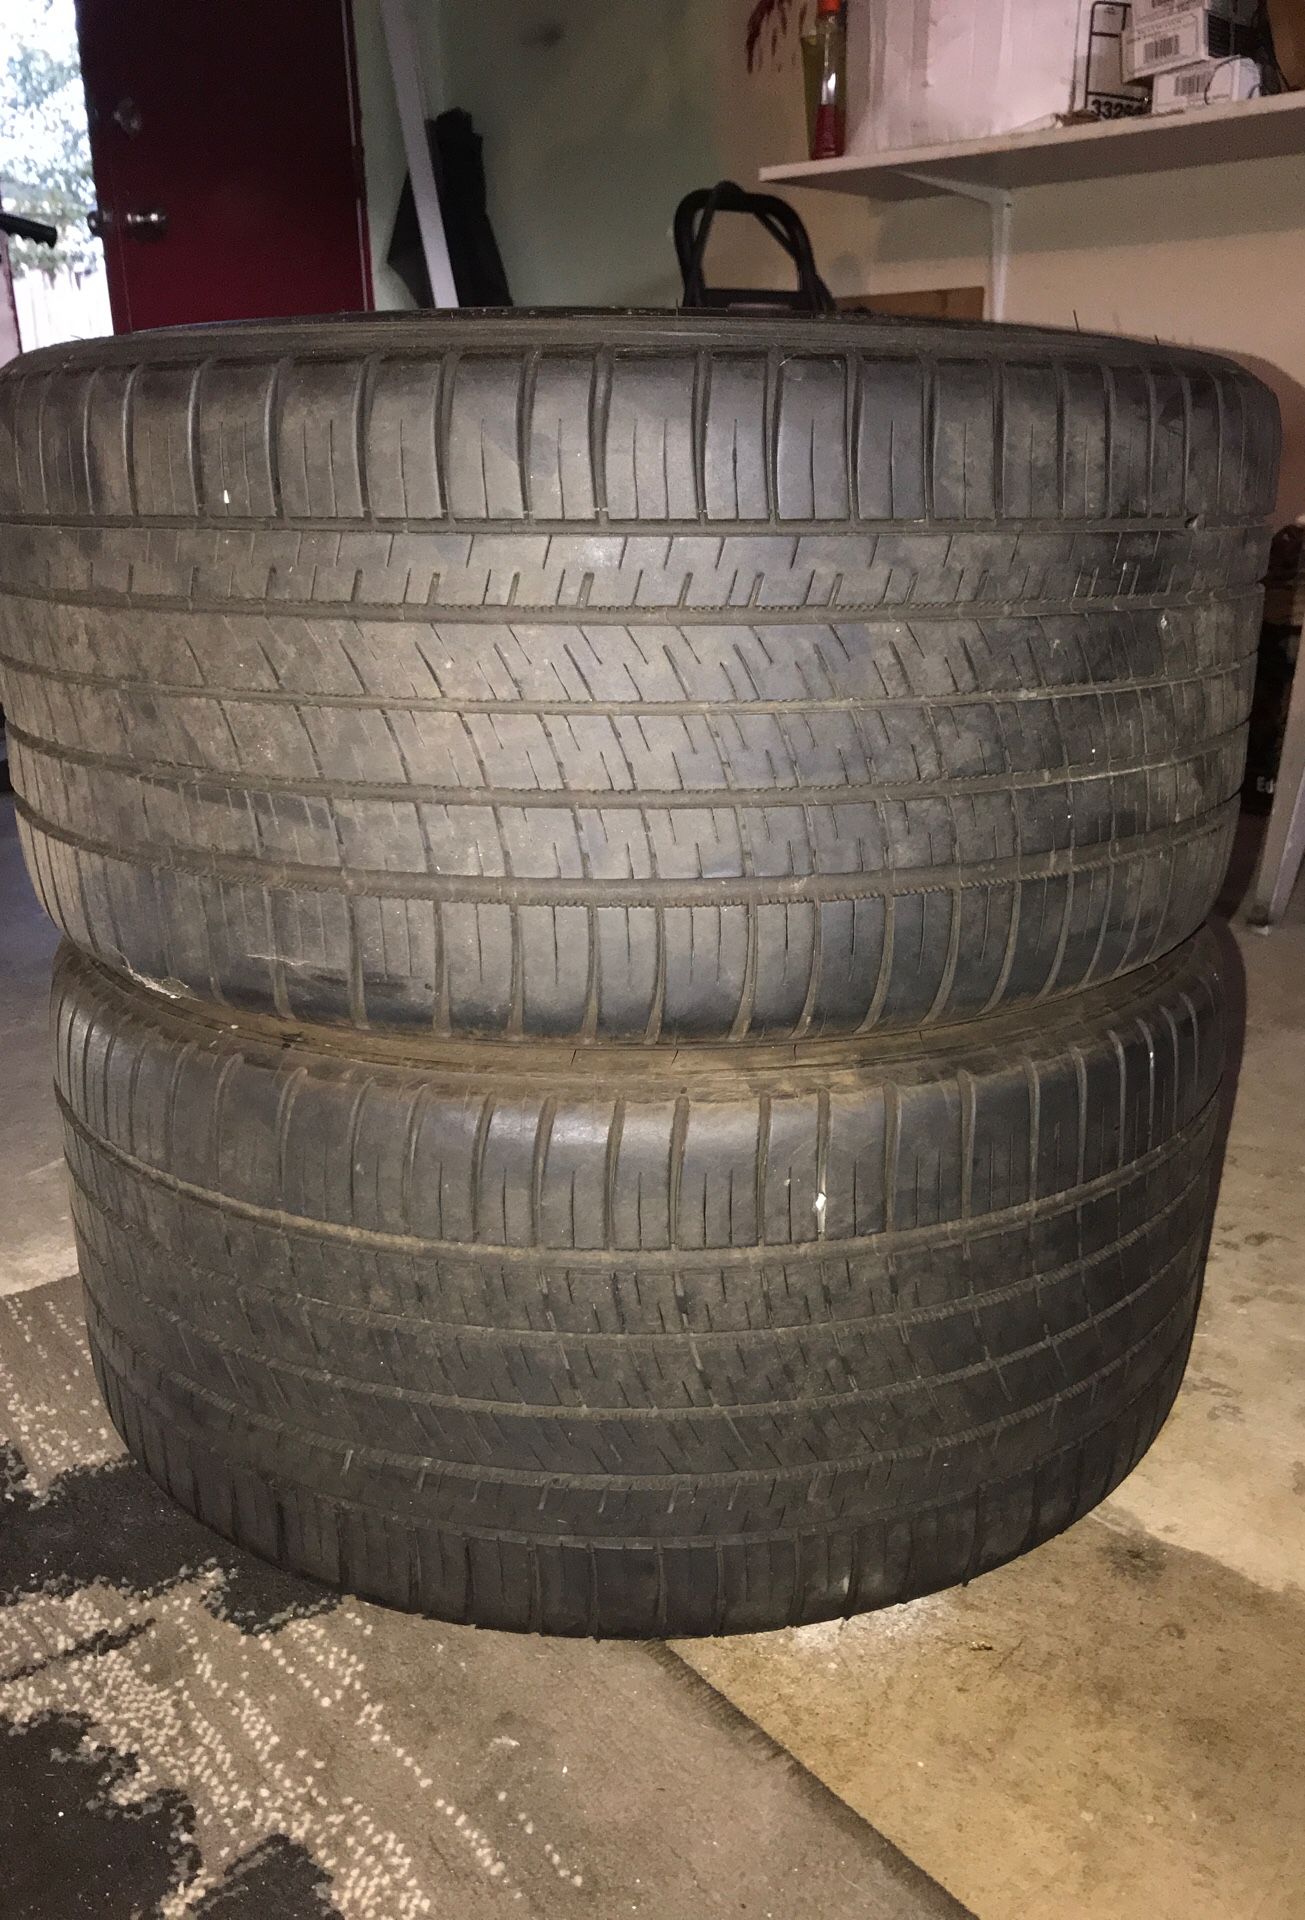 19” tires